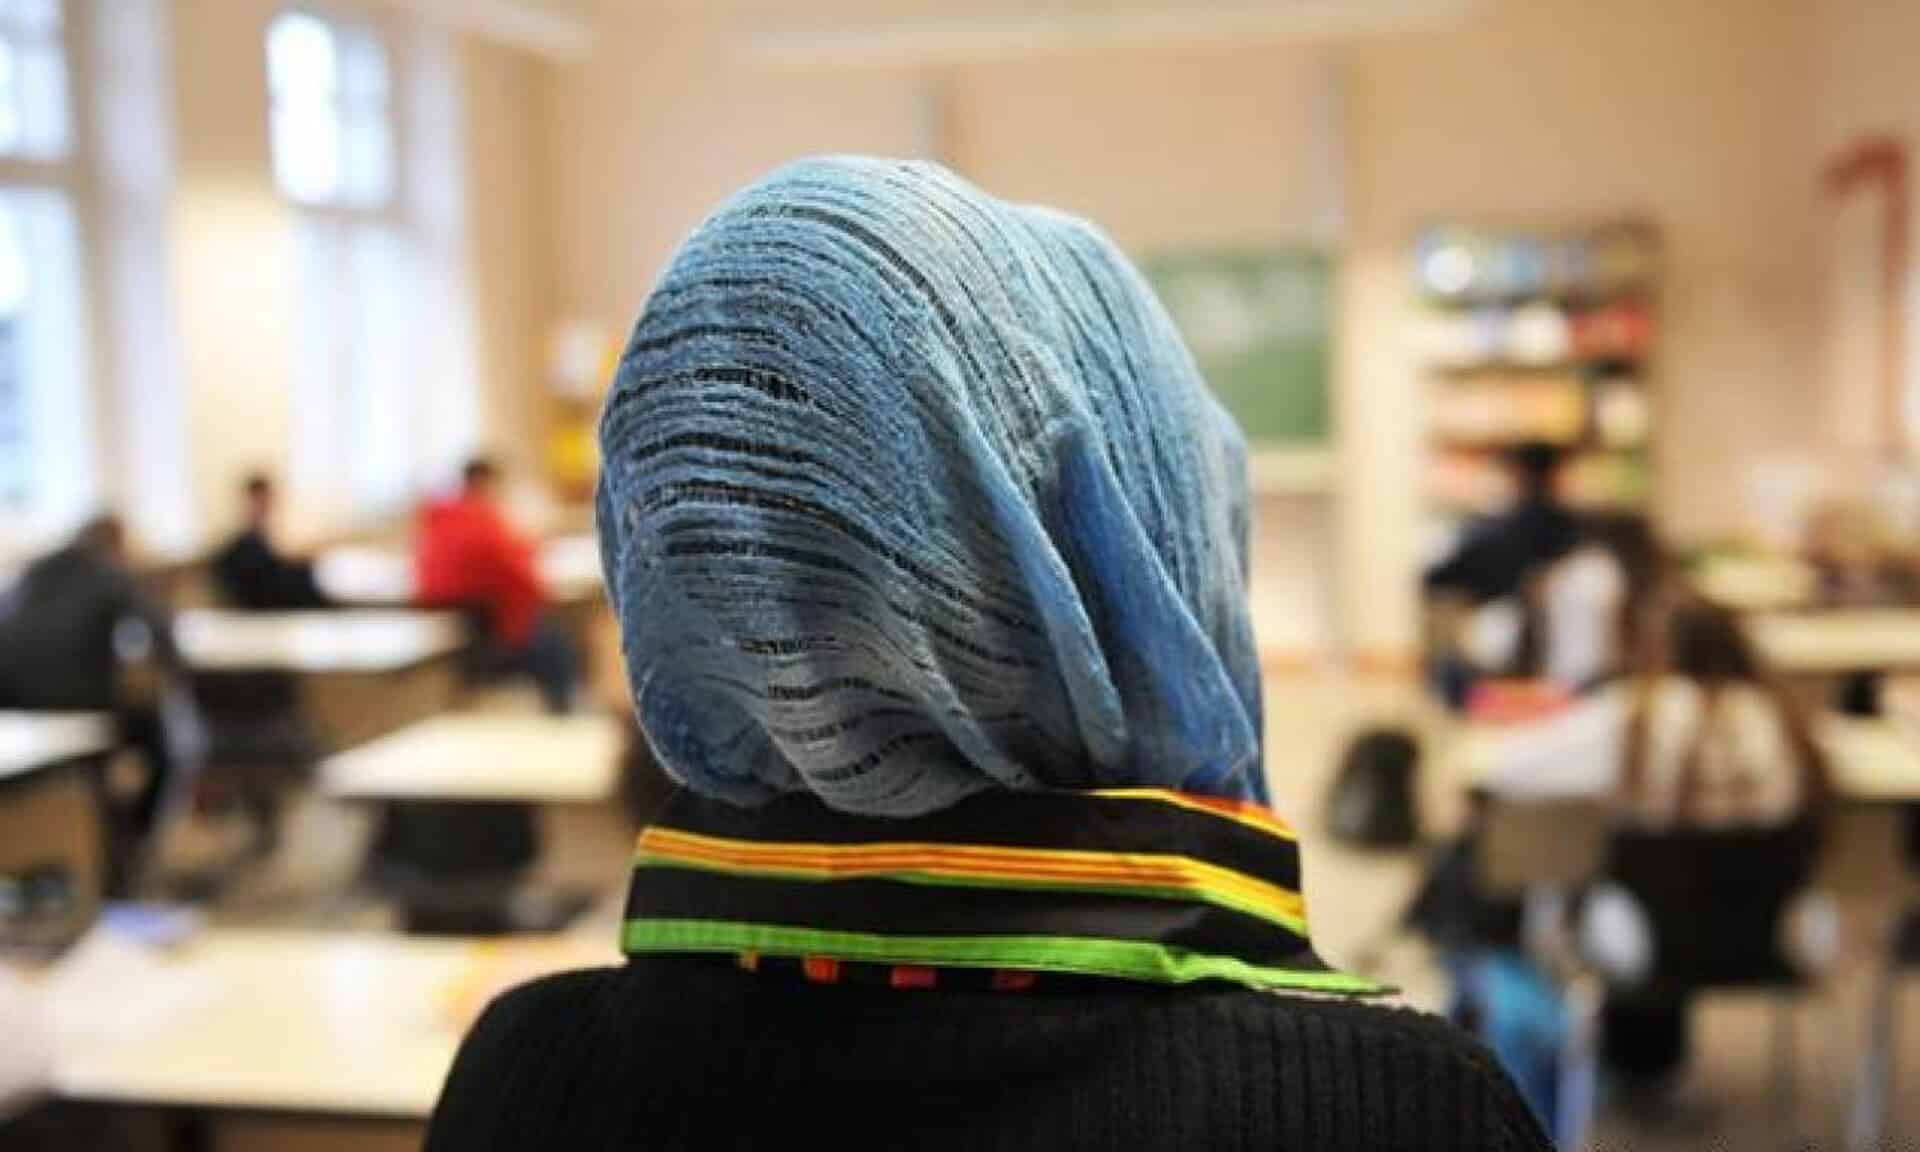 Gallia_-islamic-headscarf